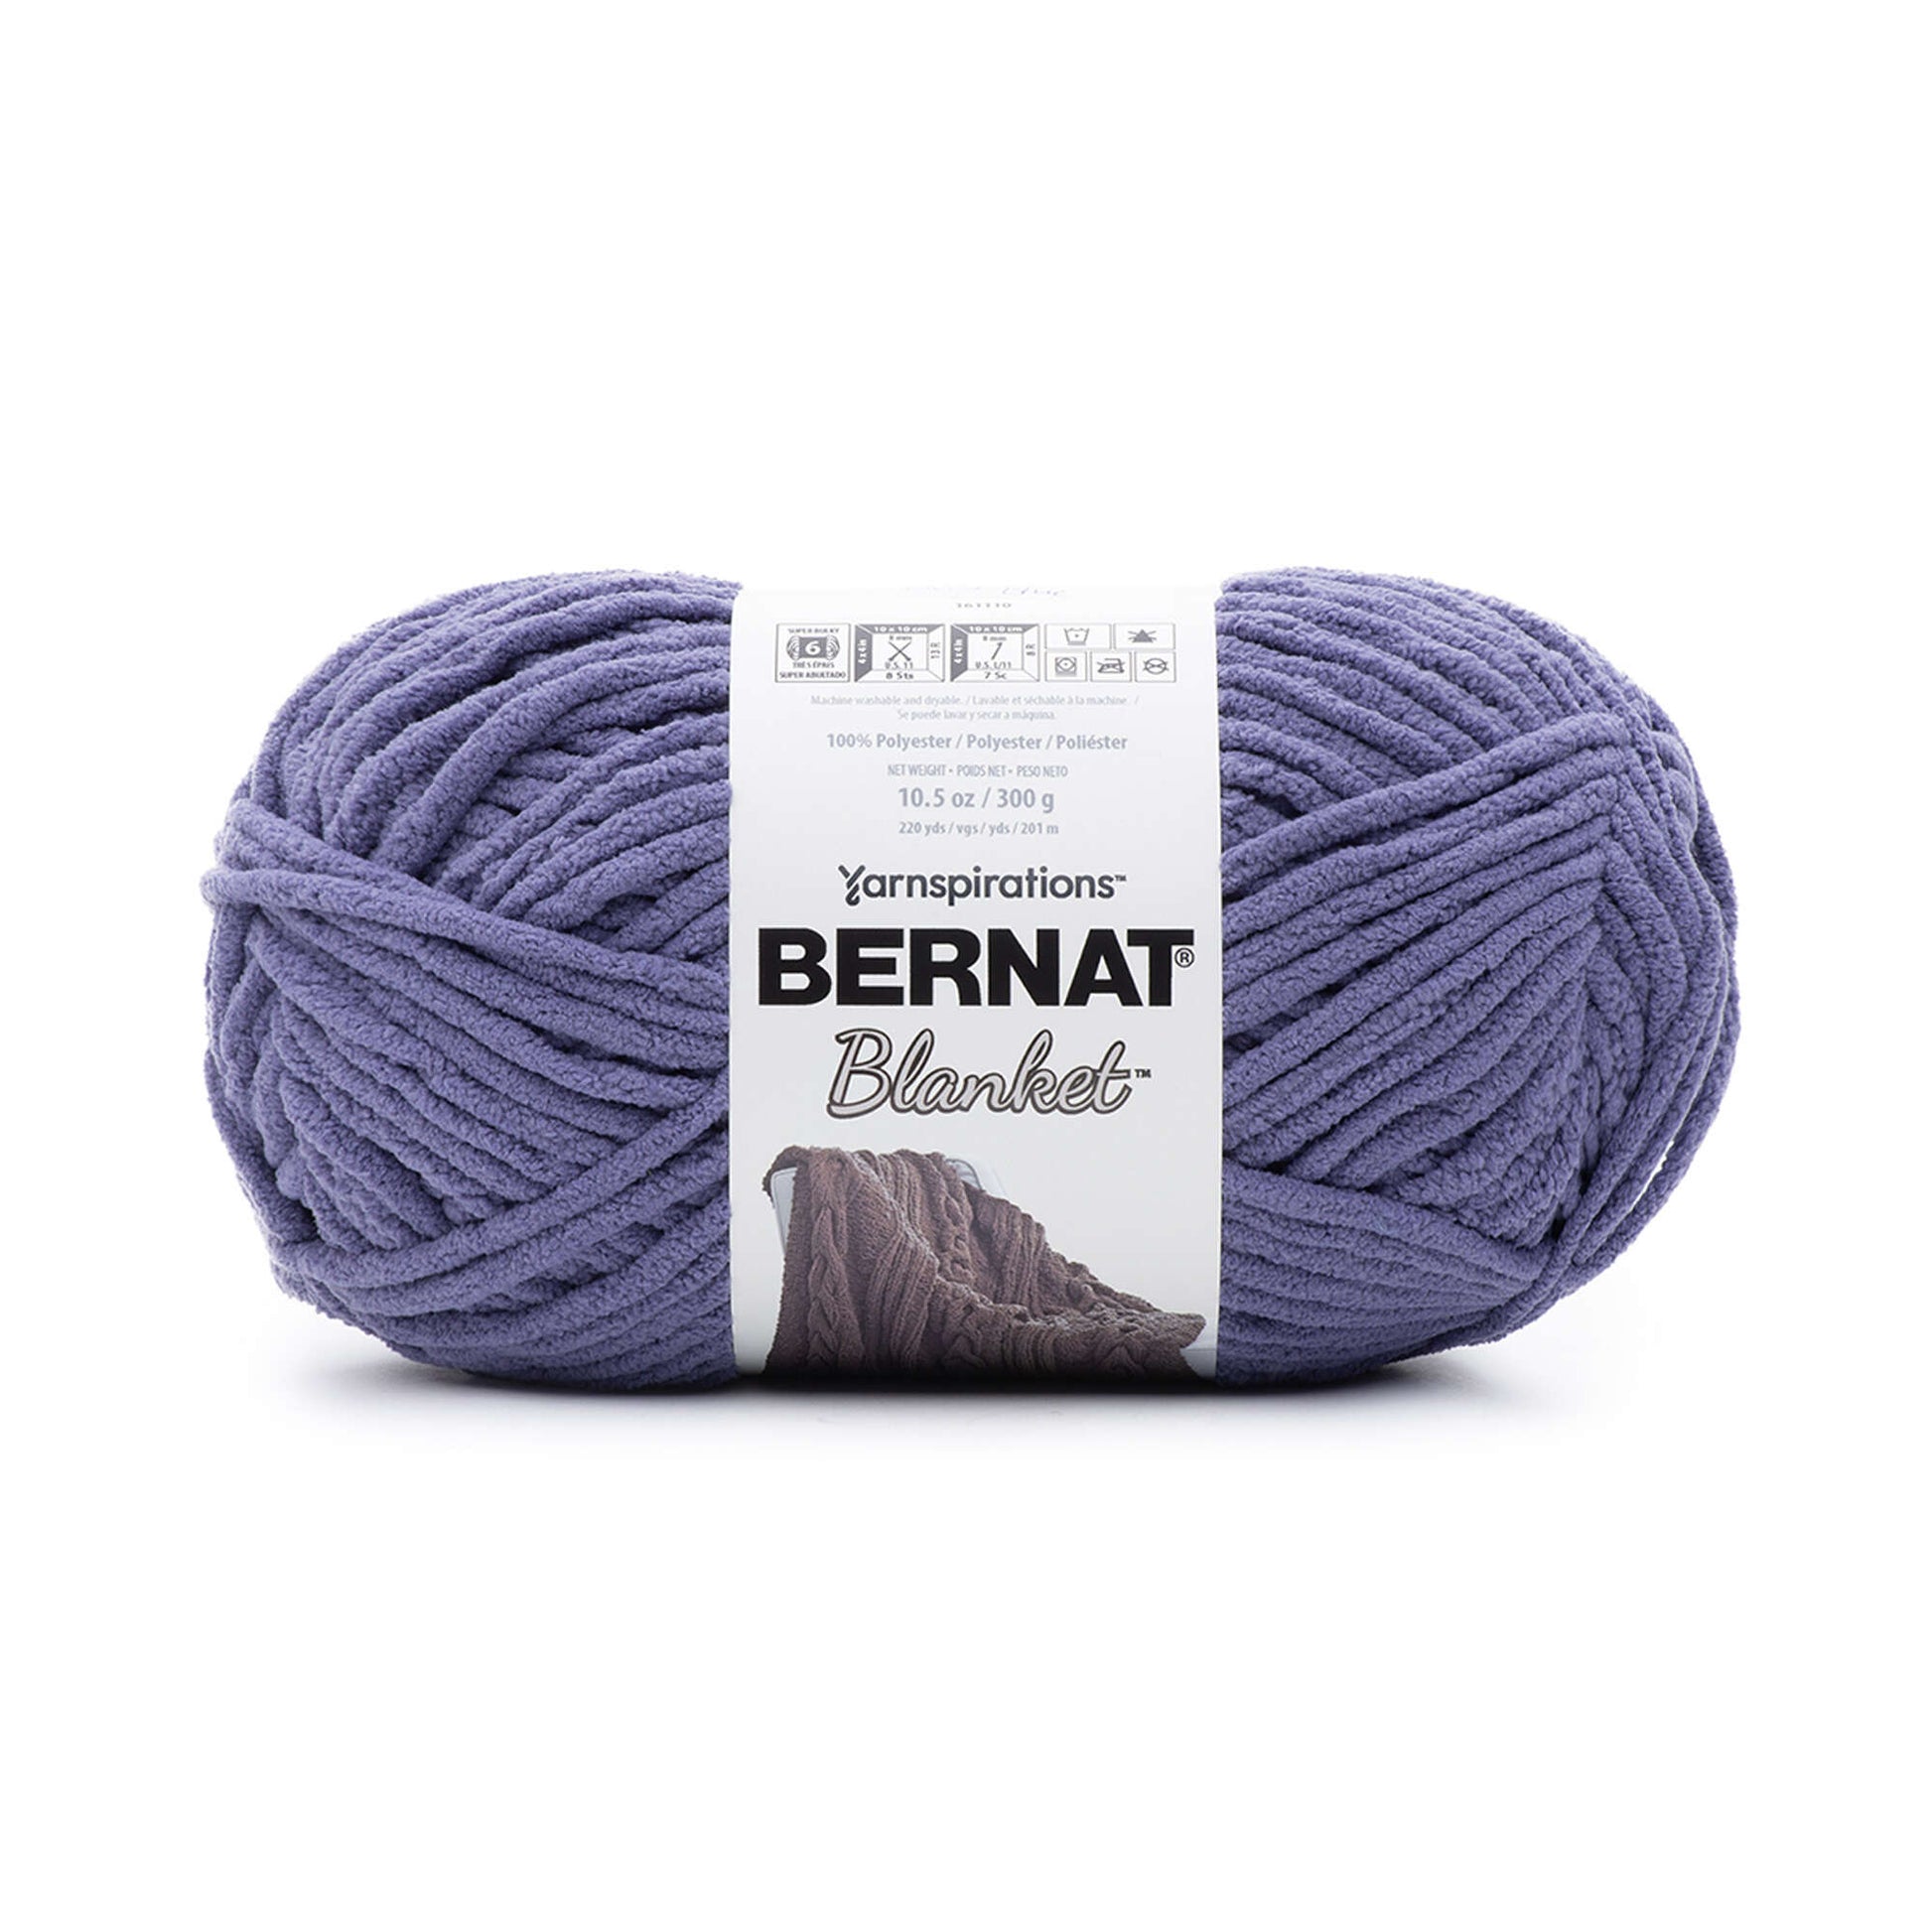 Bernat Blanket Yarn - Big Ball (10.5 oz) - 2 Pack with Pattern (Sonoma)